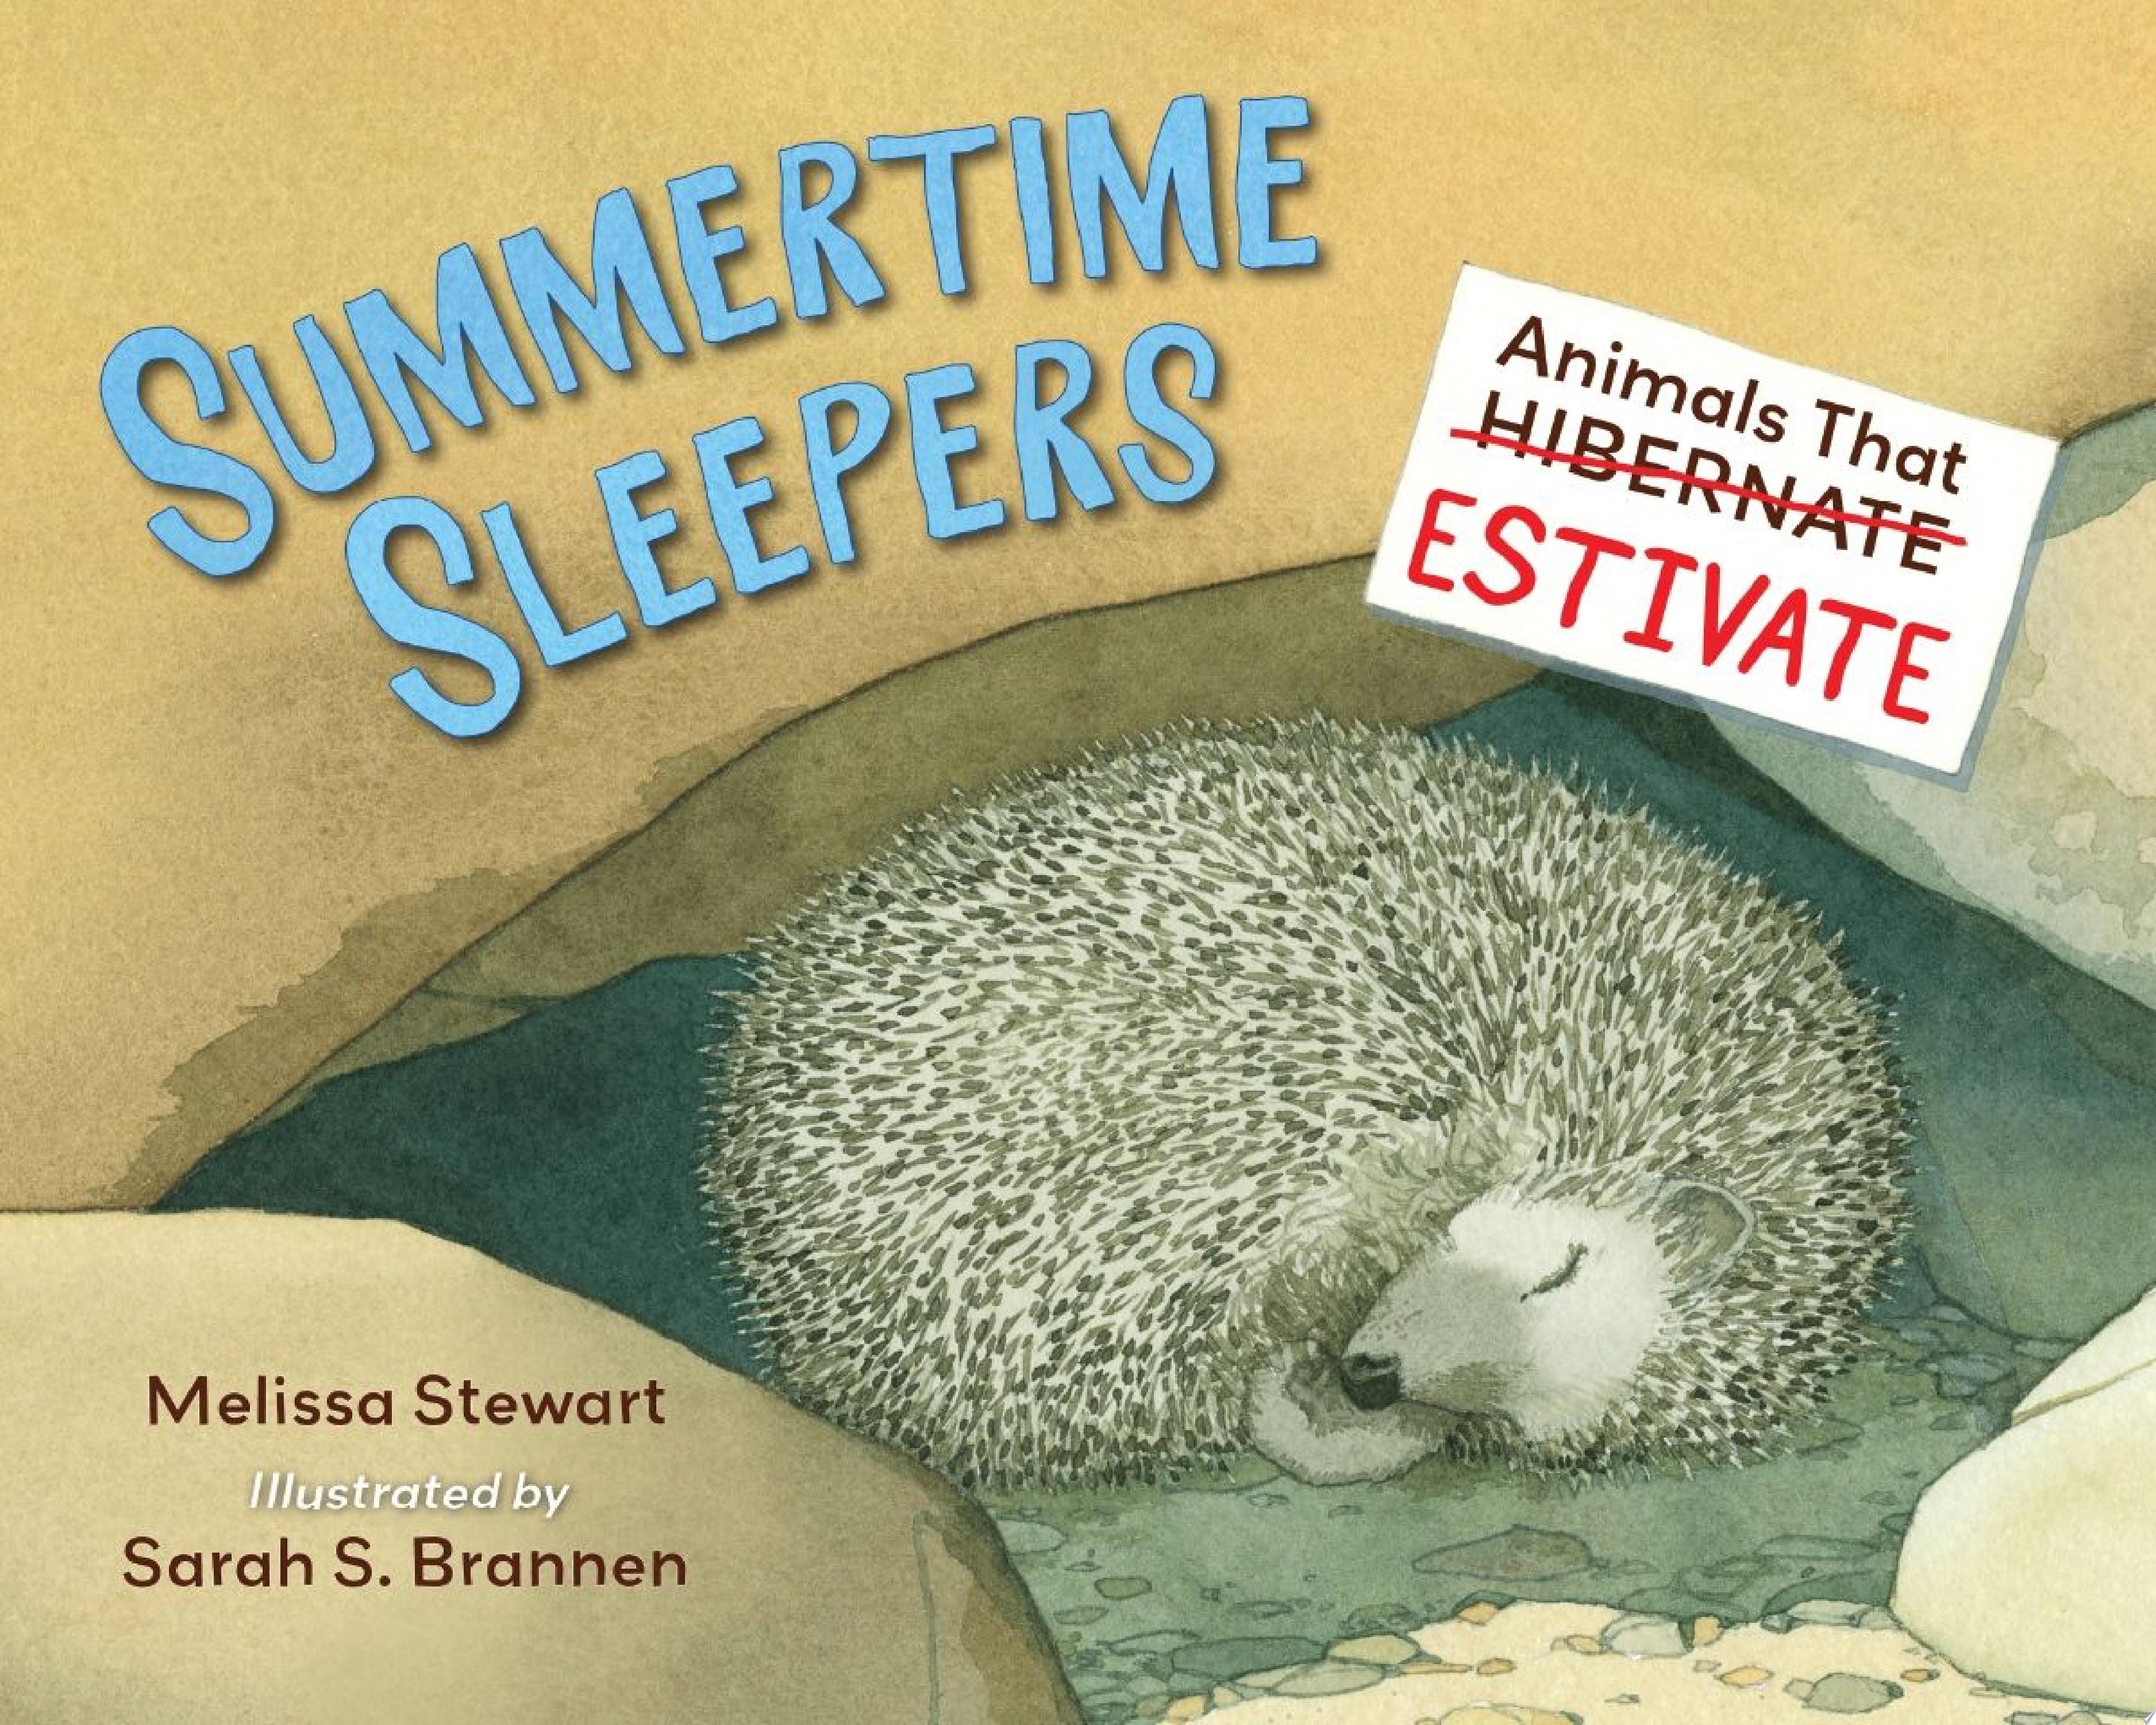 Image for "Summertime Sleepers"